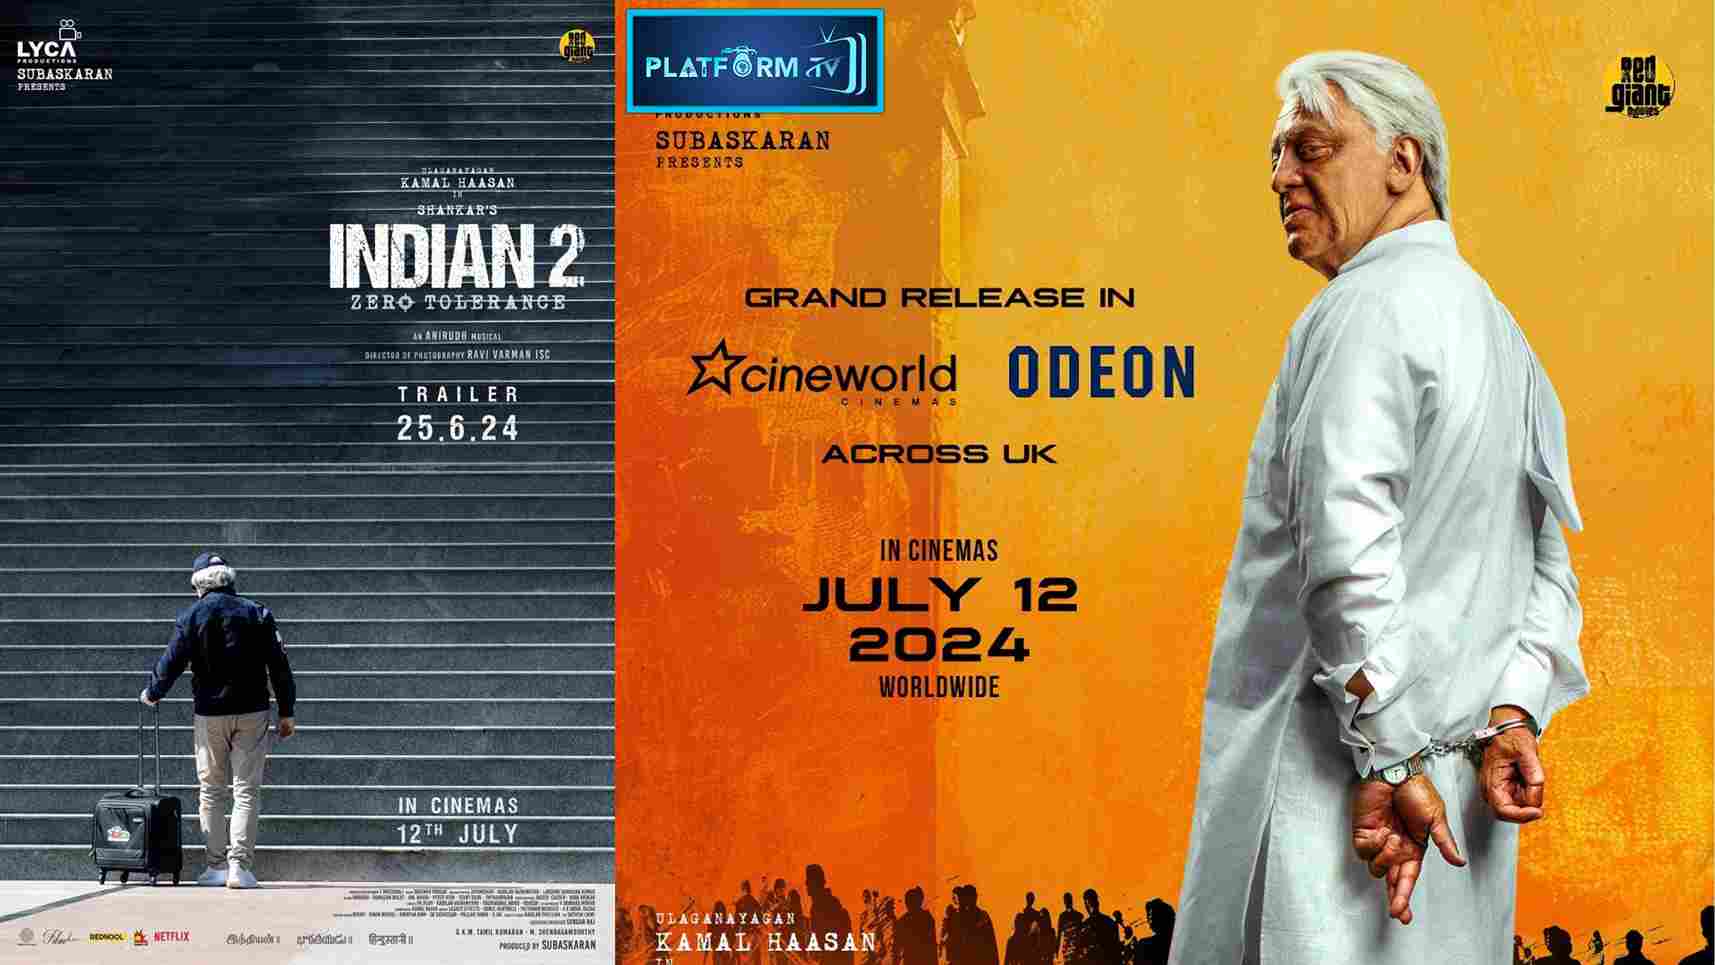 Indian 2 Trailer Release Date - Platform Tamil